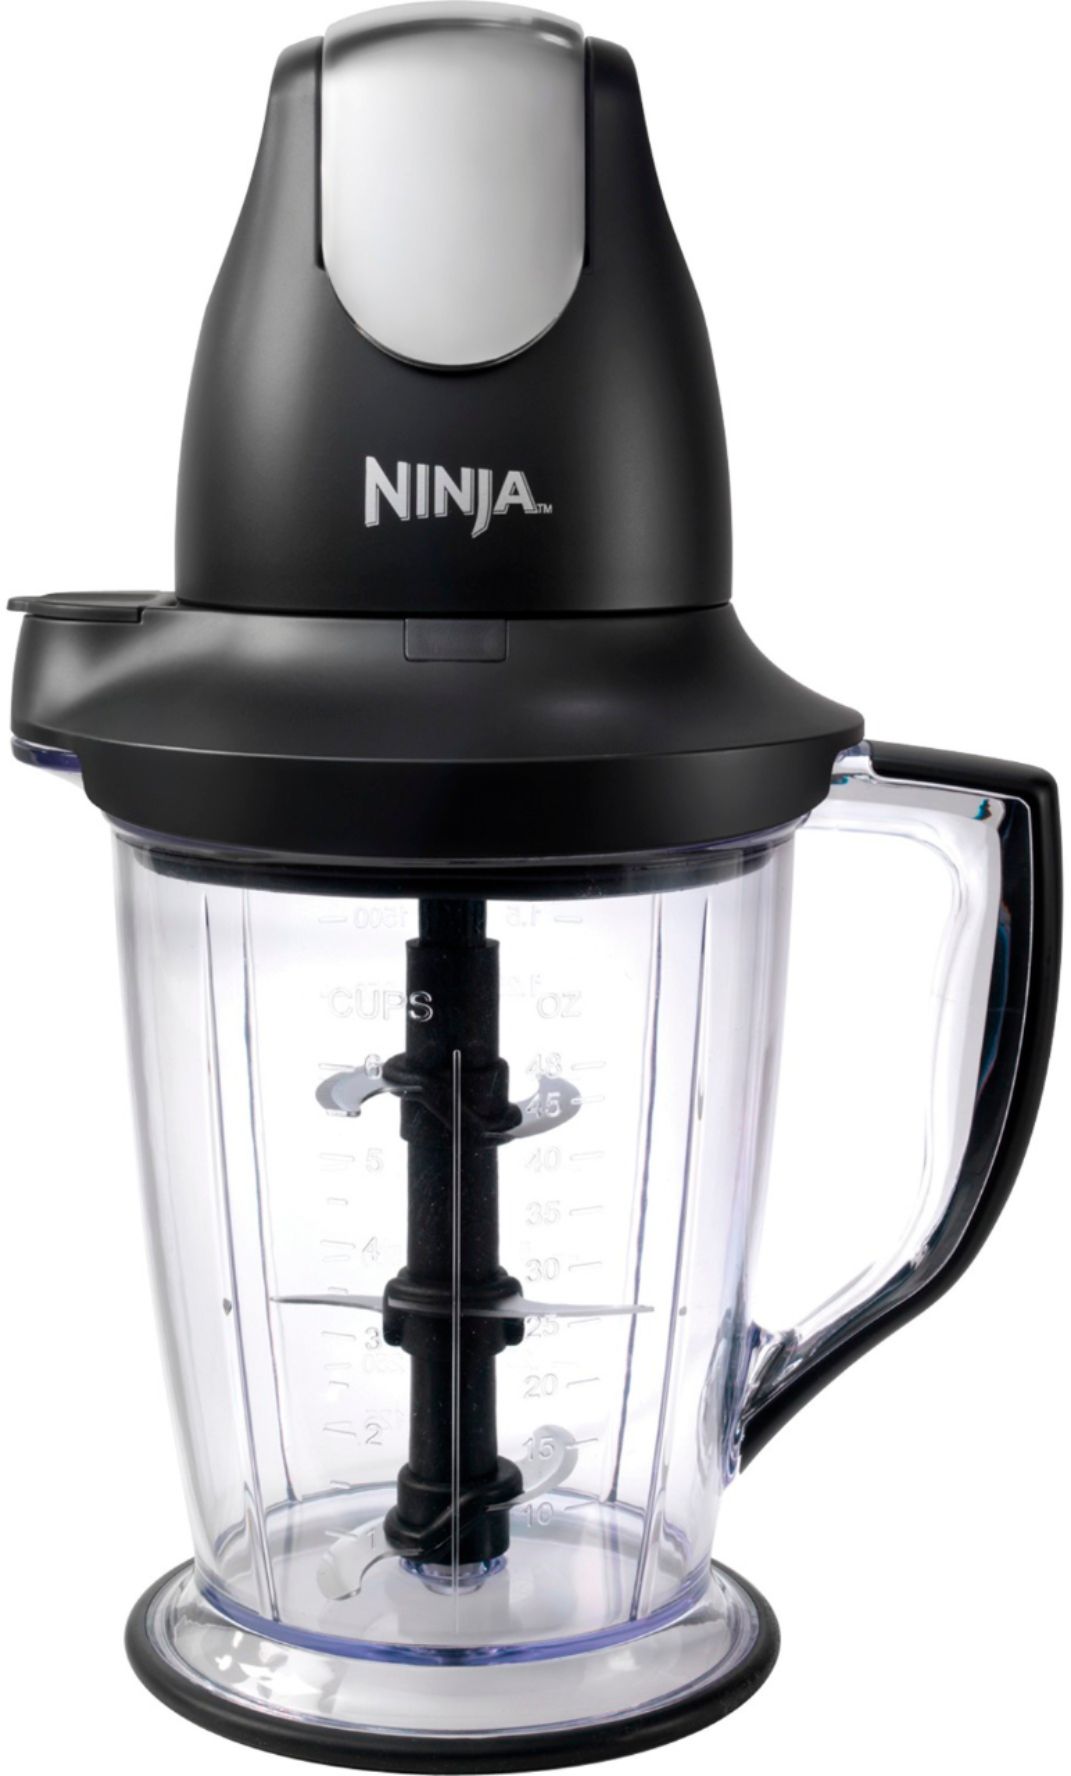 Ninja Master Prep Professional 450-Watt Food Processor and Hand Mixer Bundle